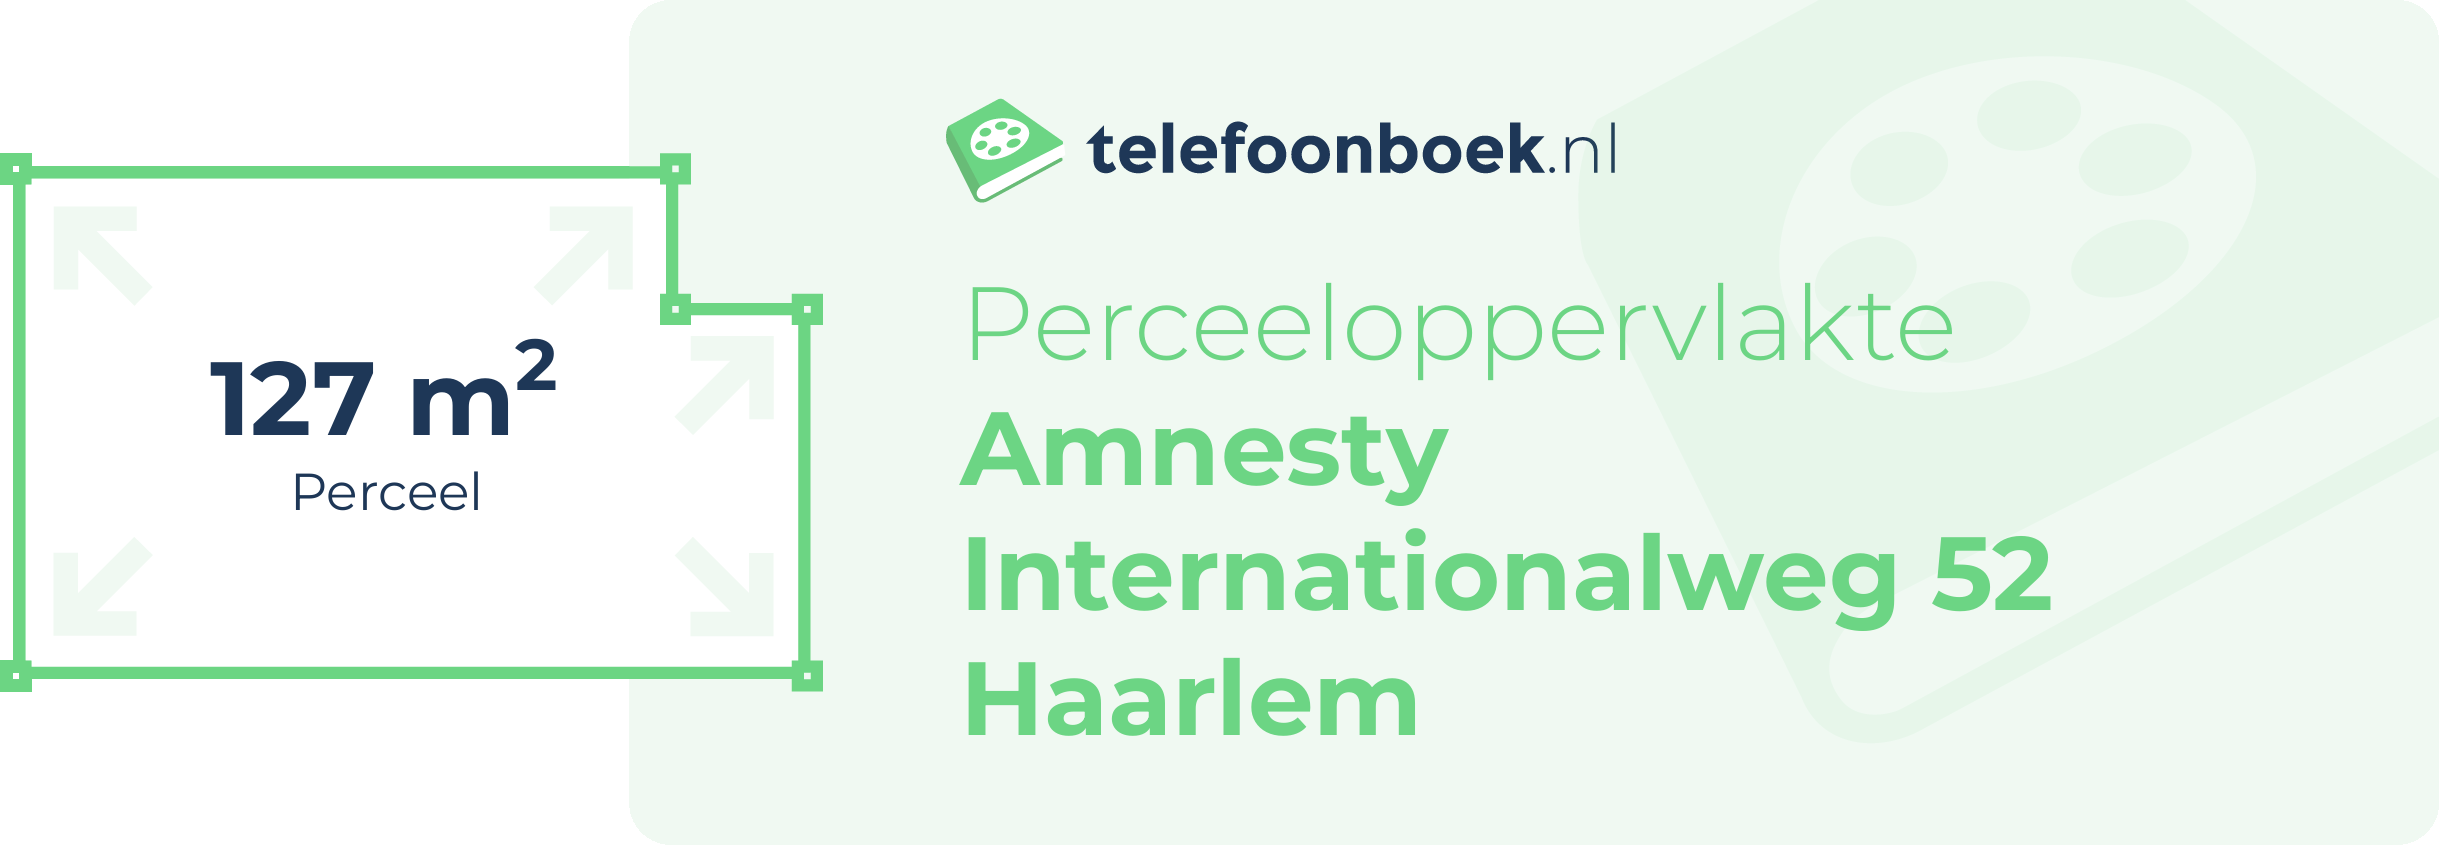 Perceeloppervlakte Amnesty Internationalweg 52 Haarlem